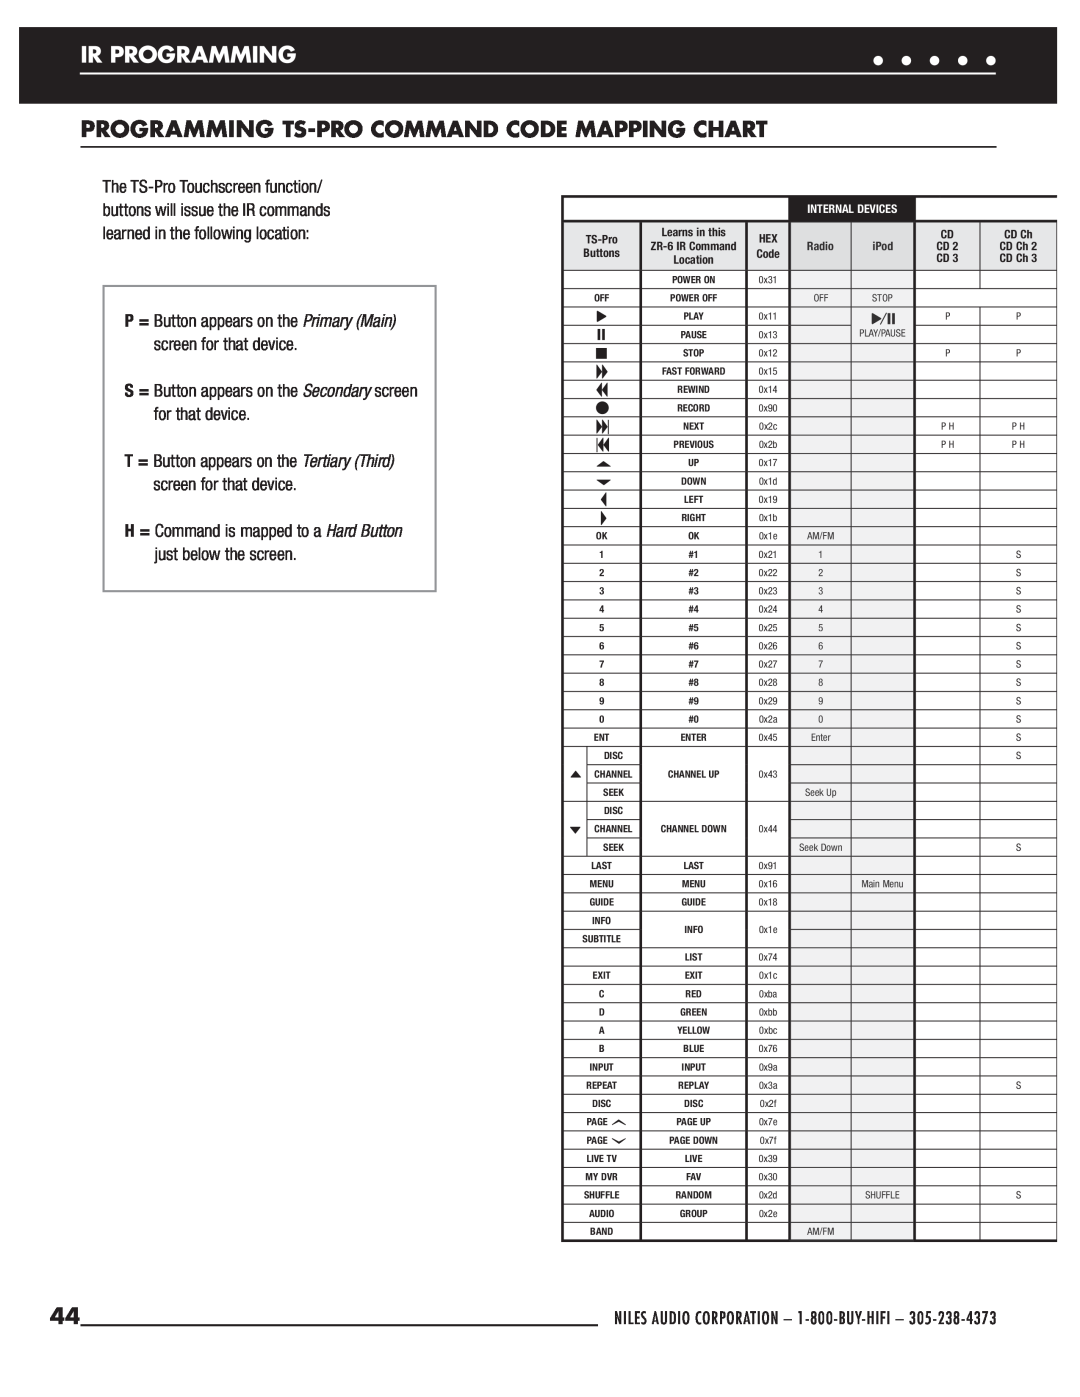 Niles Audio ZR-6 manual Programming Ts-Procommand Code Mapping Chart, Ir Programming, Location, CD Ch 